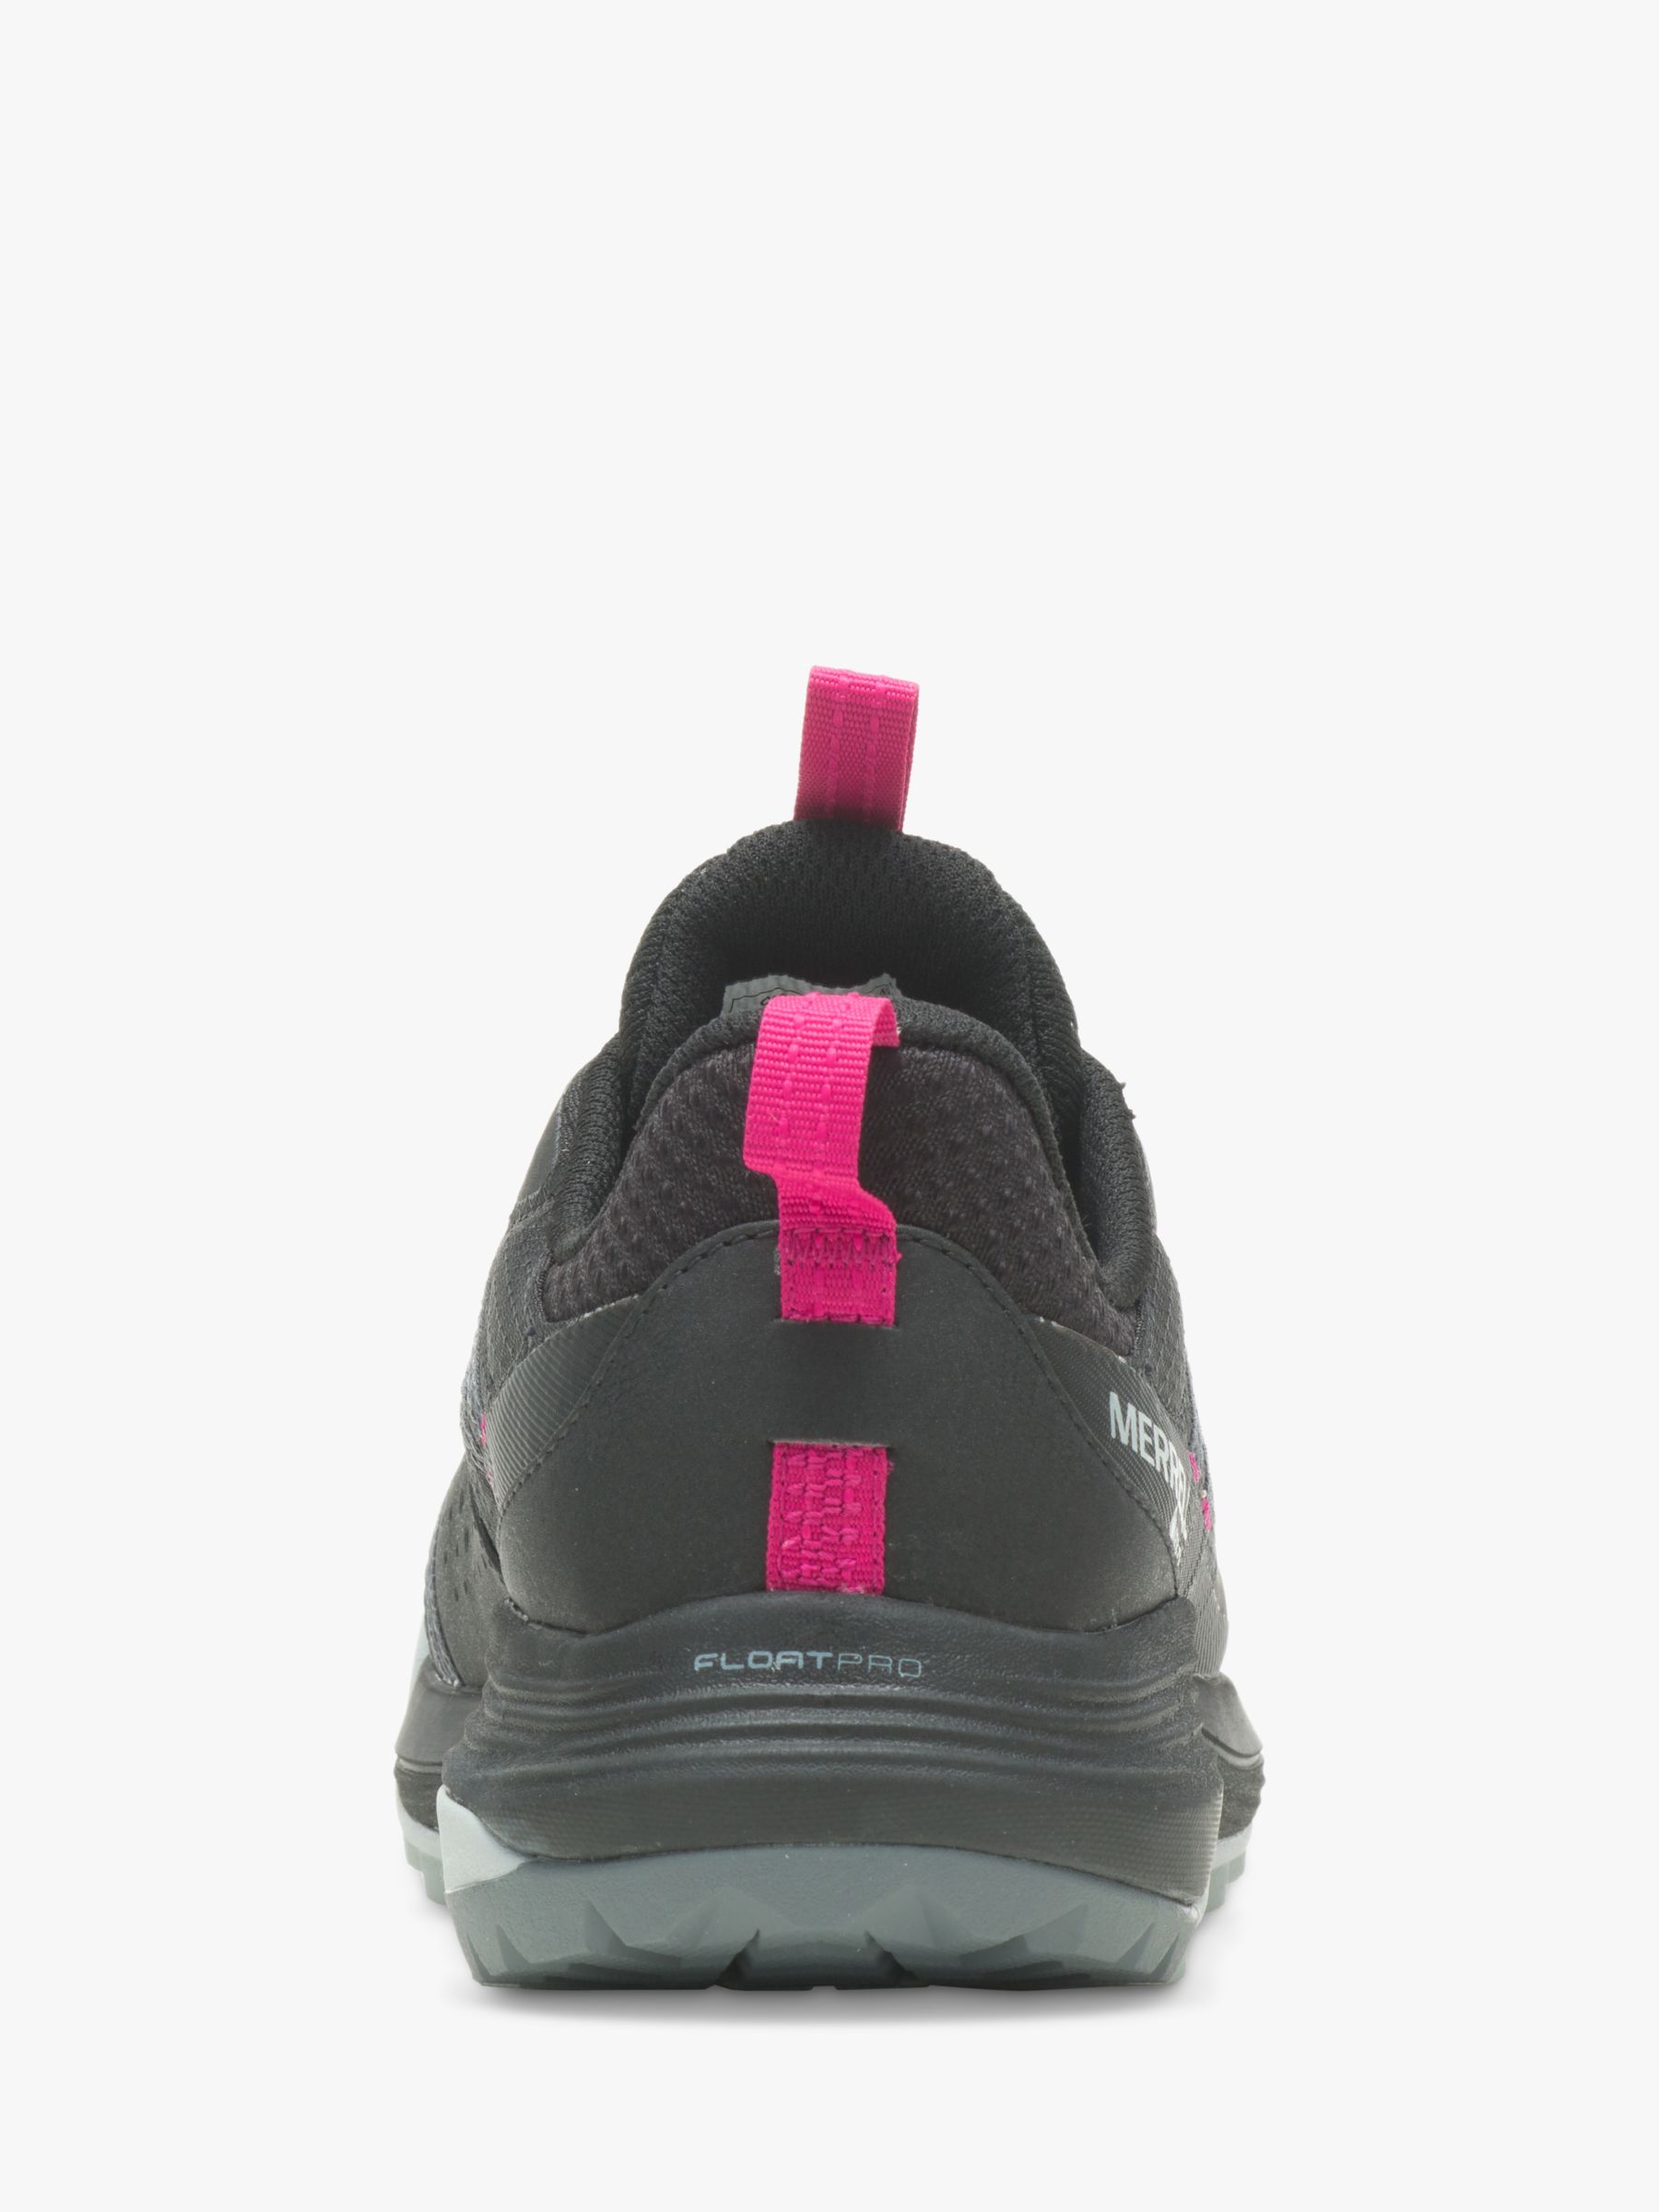 Merrell Siren 4 Women's Waterproof Gore-Tex Hiking Shoes, Black, 6